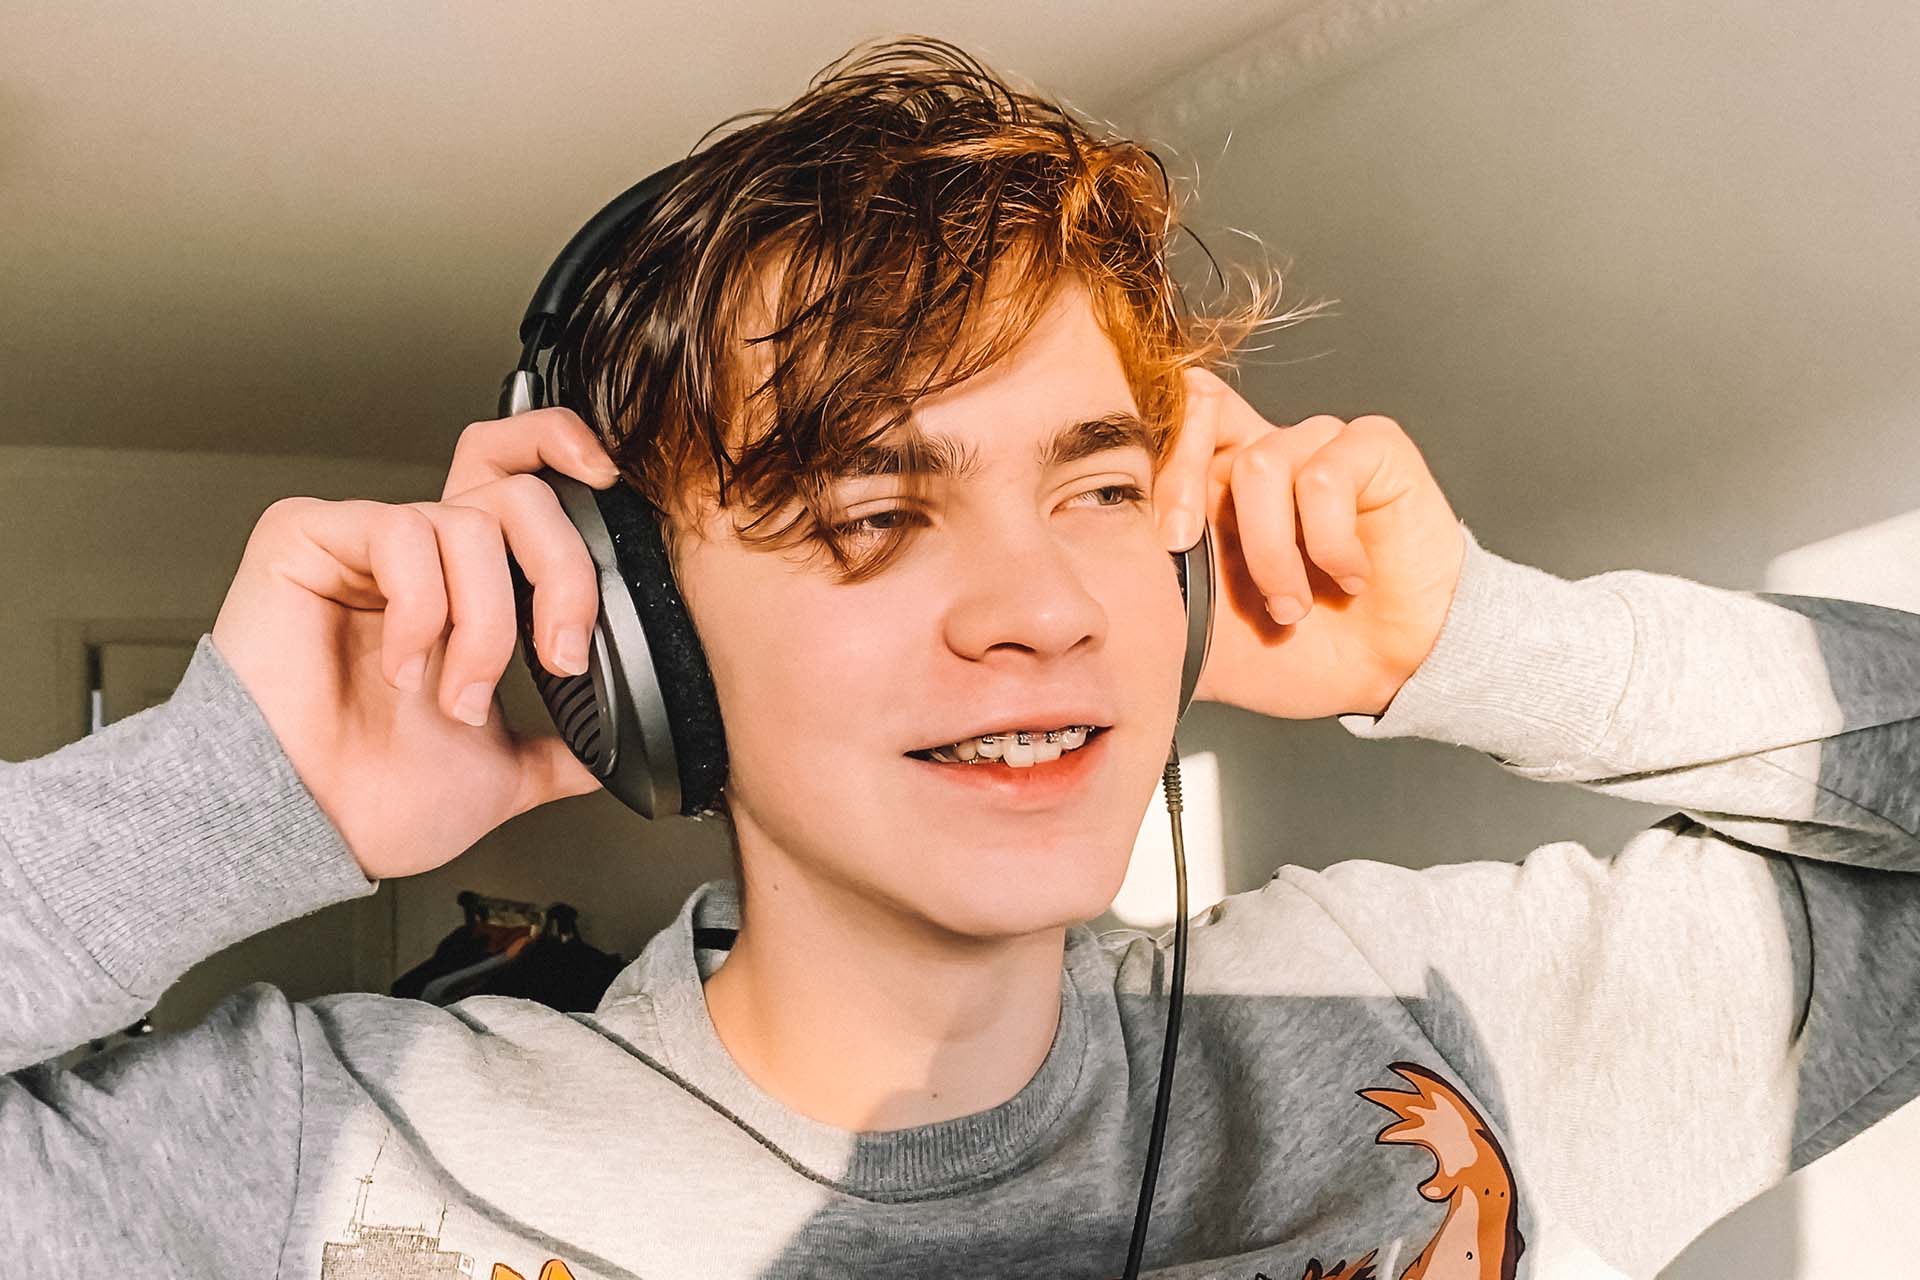 Teen boy with braces listens to music on headphones in Koreatown, Los Angeles, CA